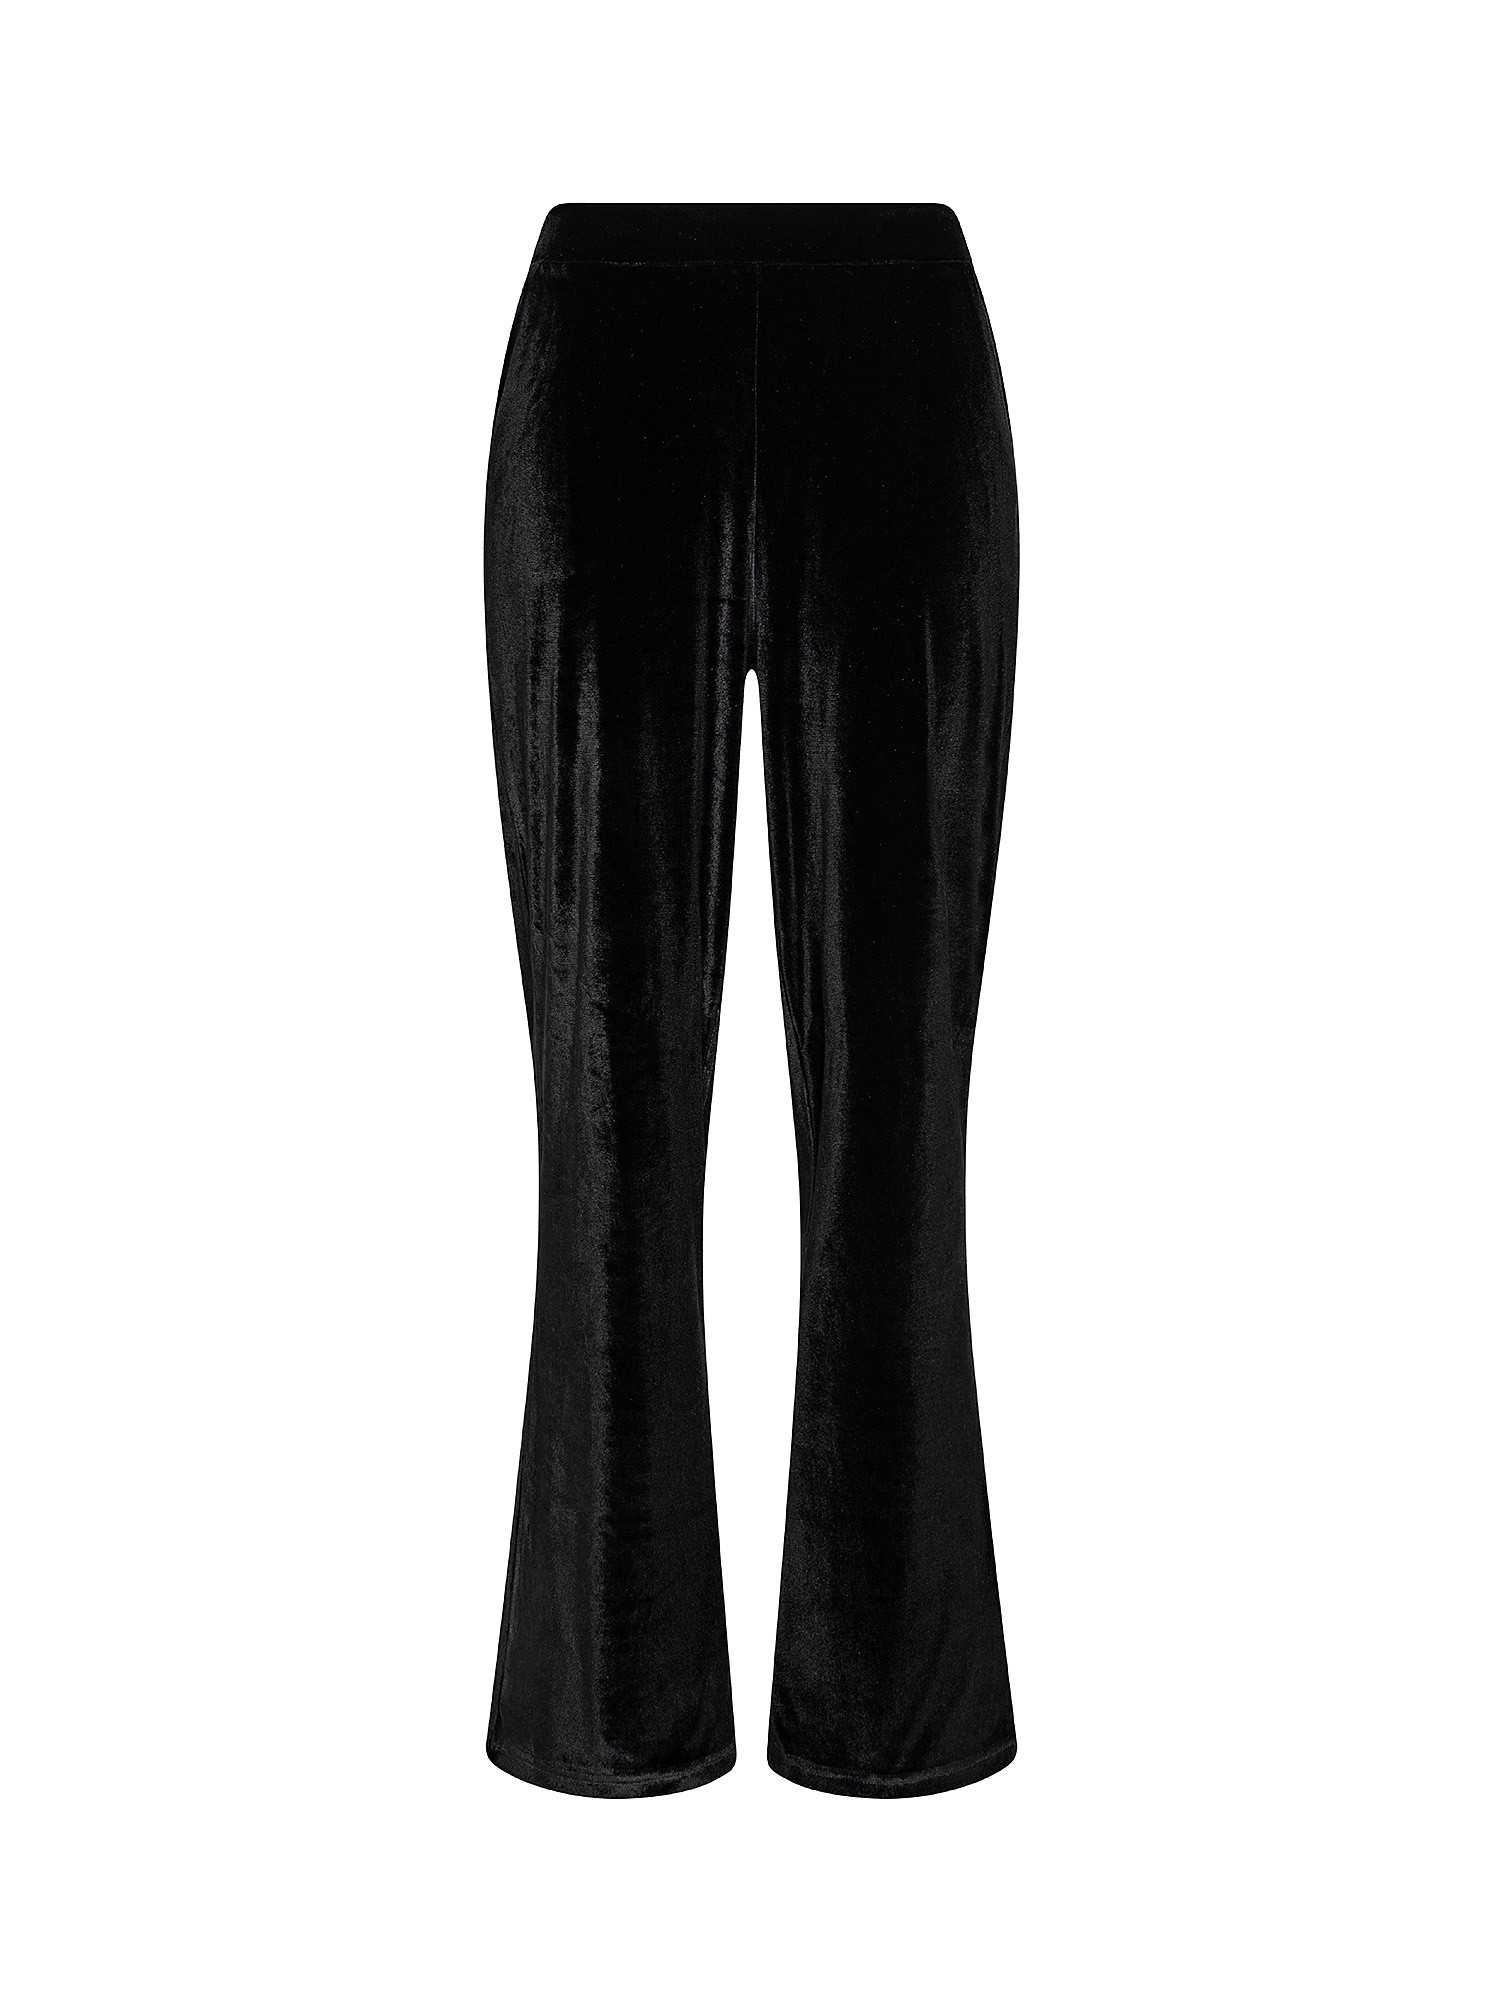 Велюровые брюки Koan Knitwear, черный брюки велюровые на меху клариса